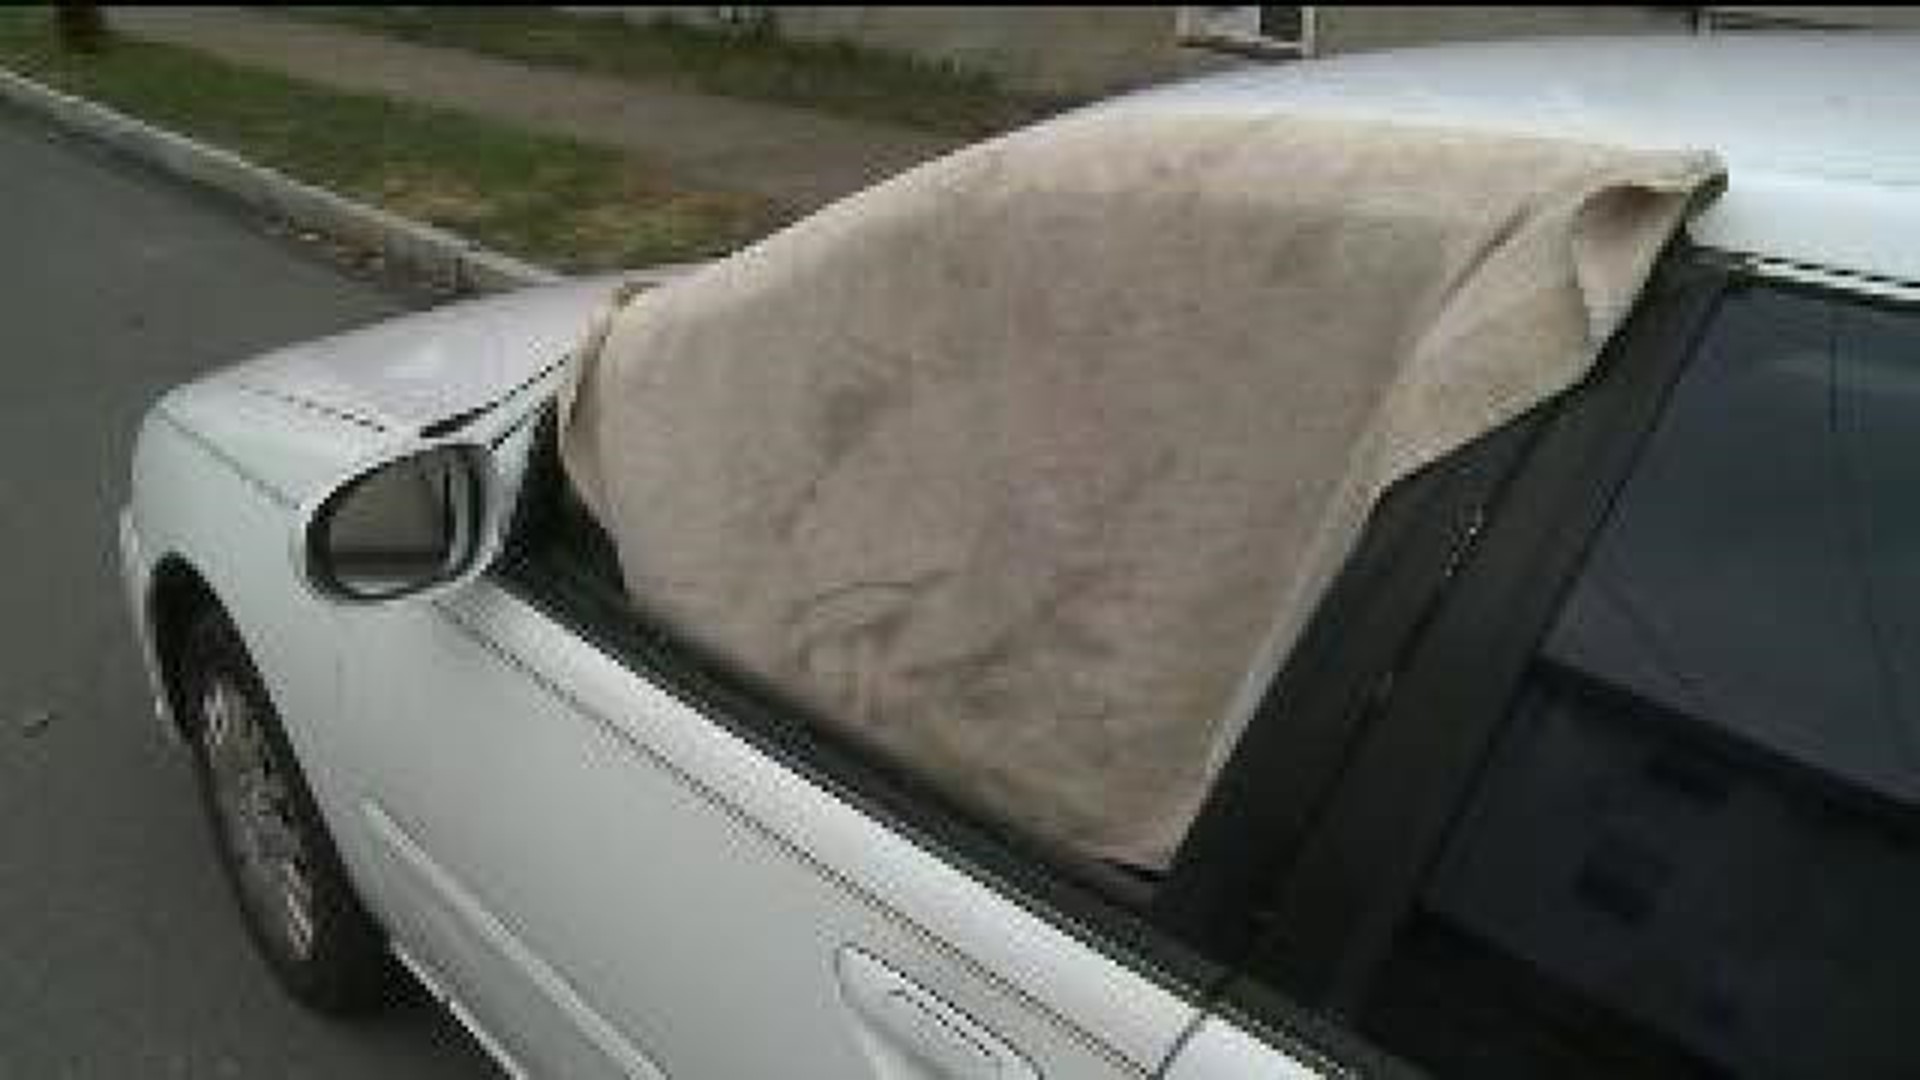 Vandals Shoot Out Dozens of Car Windows